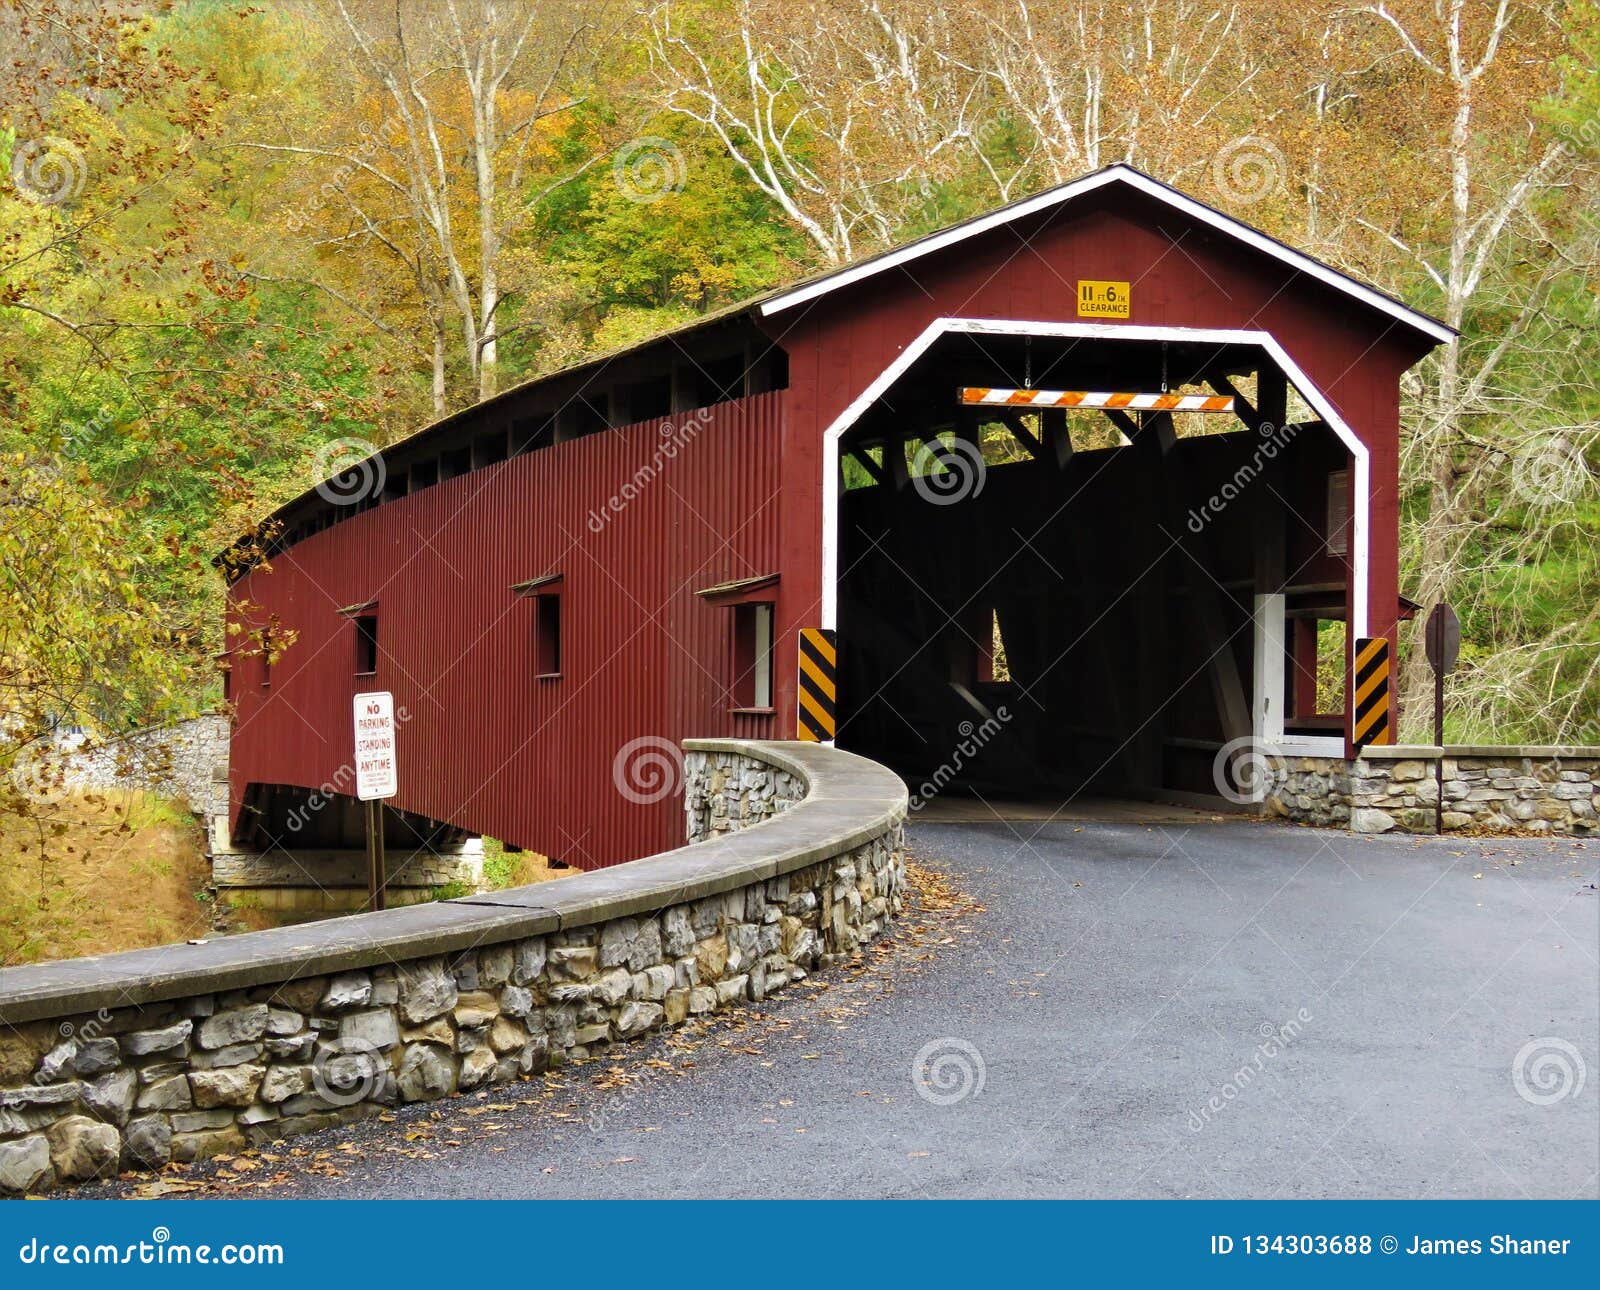 colemanville covered bridge